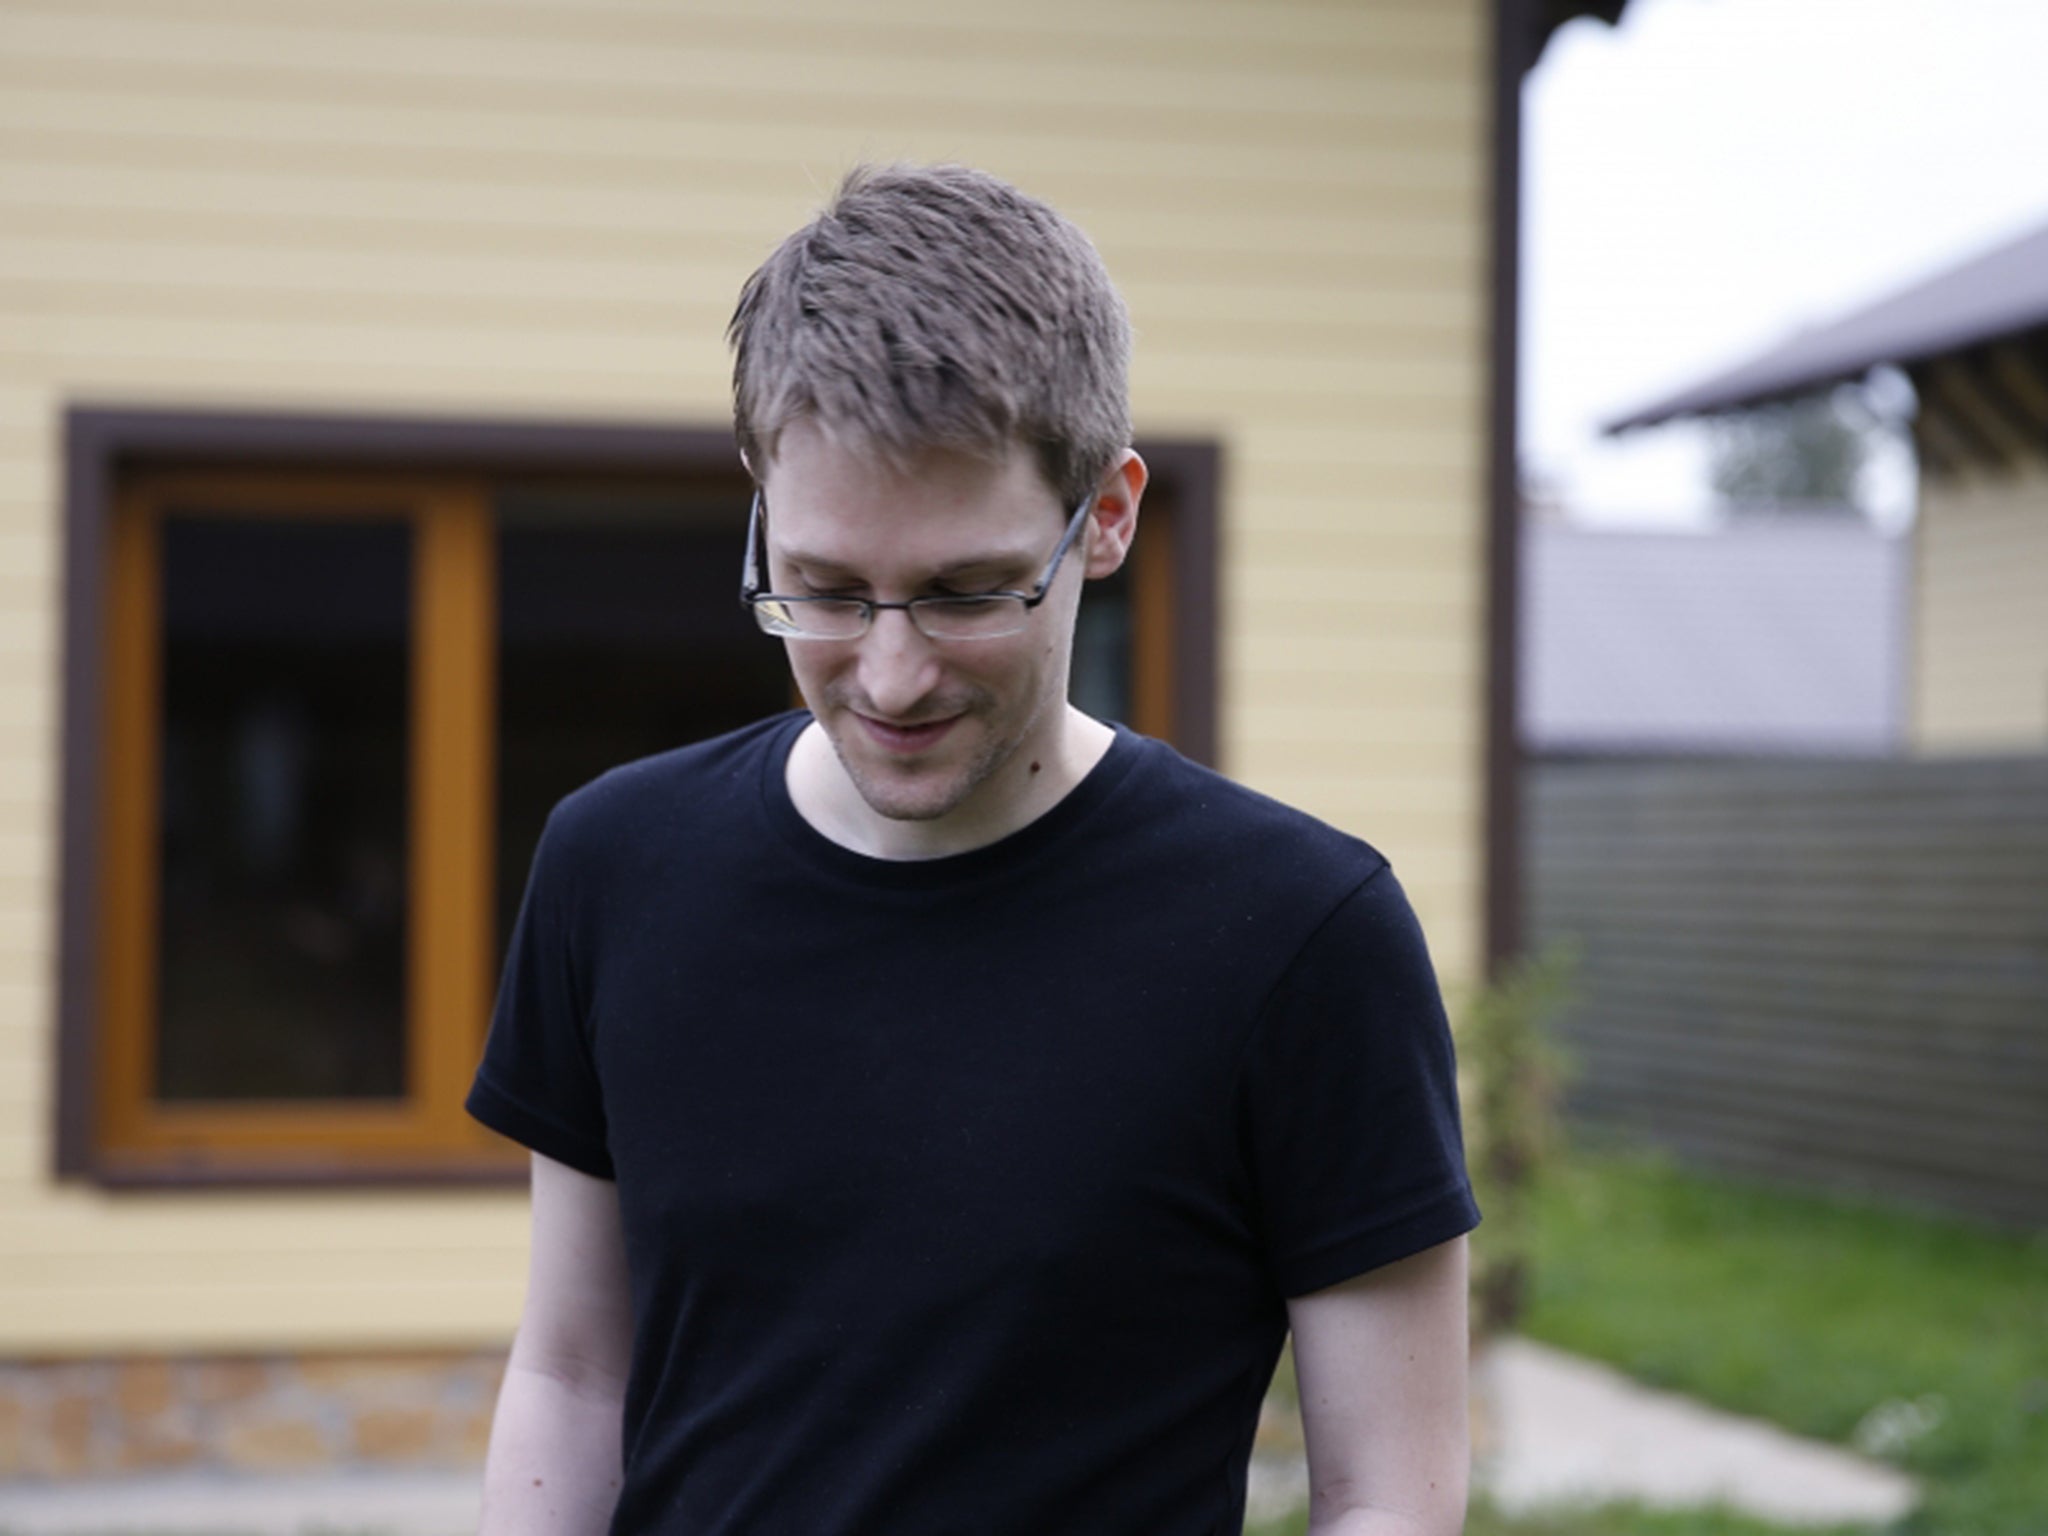 When the whistle blew: Edward Snowden in
‘Citizenfour’